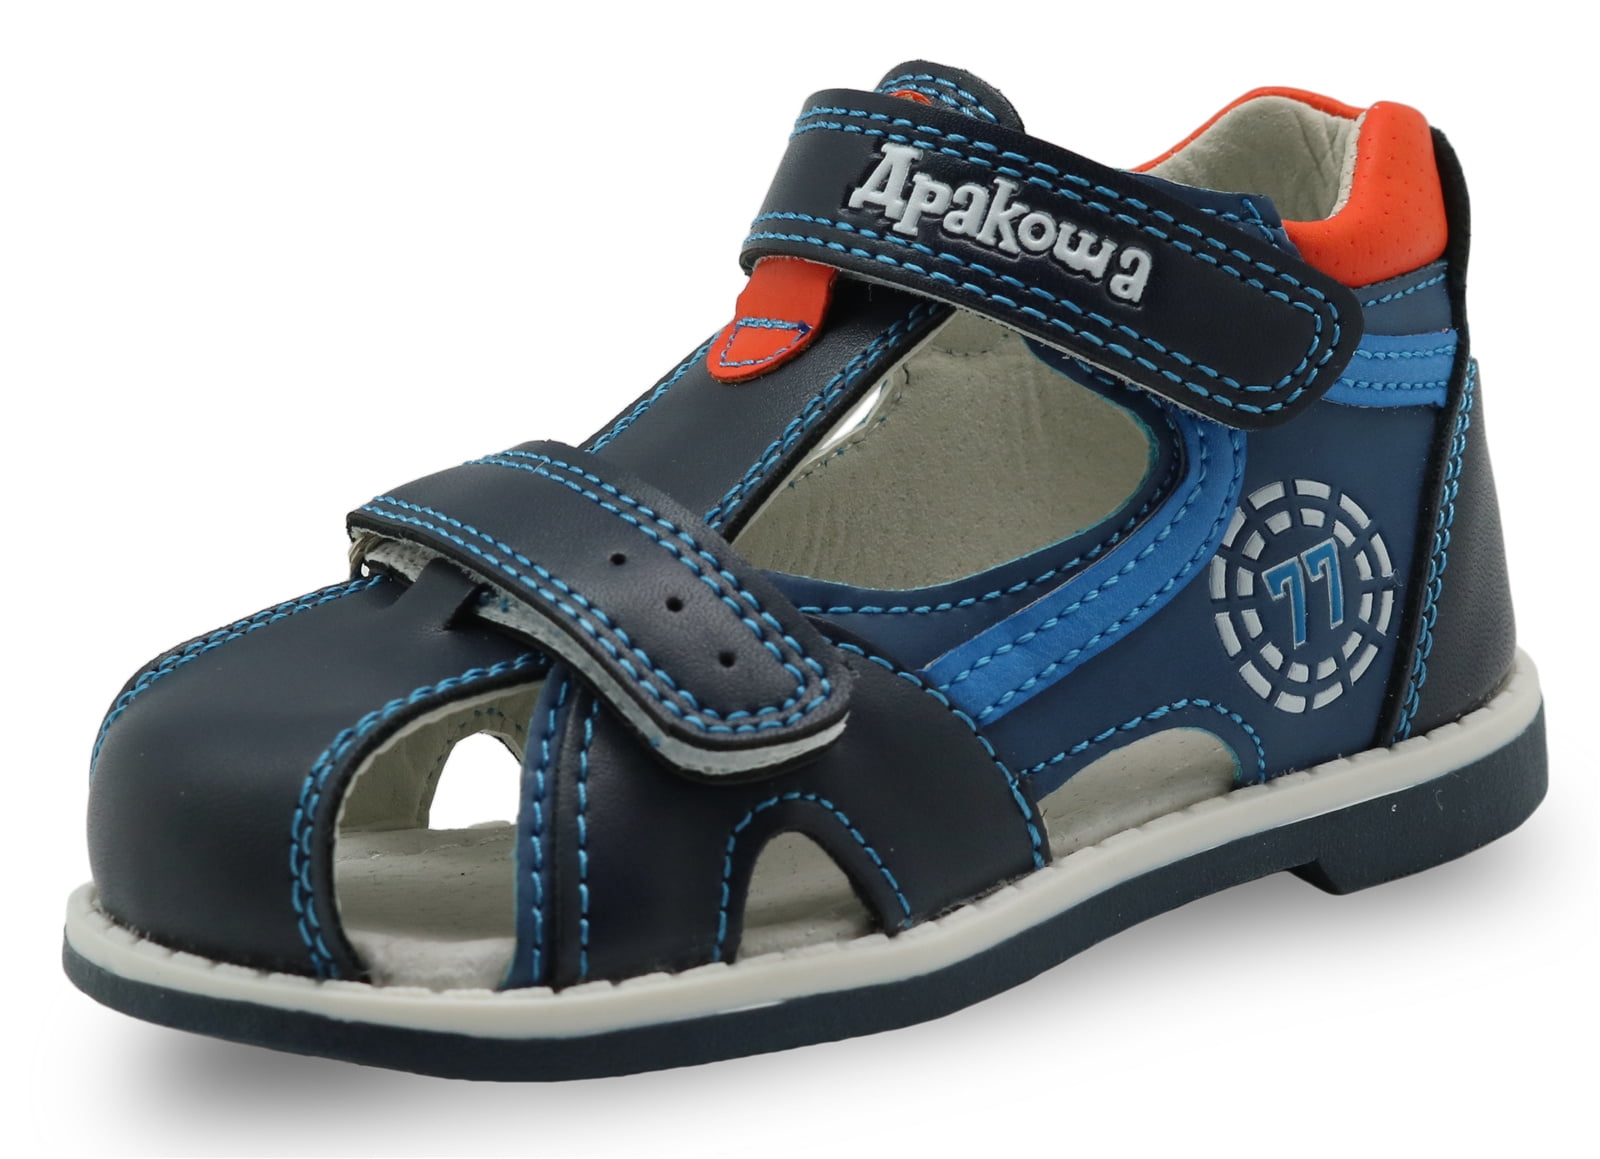 Apakowa Boys Double Adjustable Strap Closed-Toe Sandals Toddler 